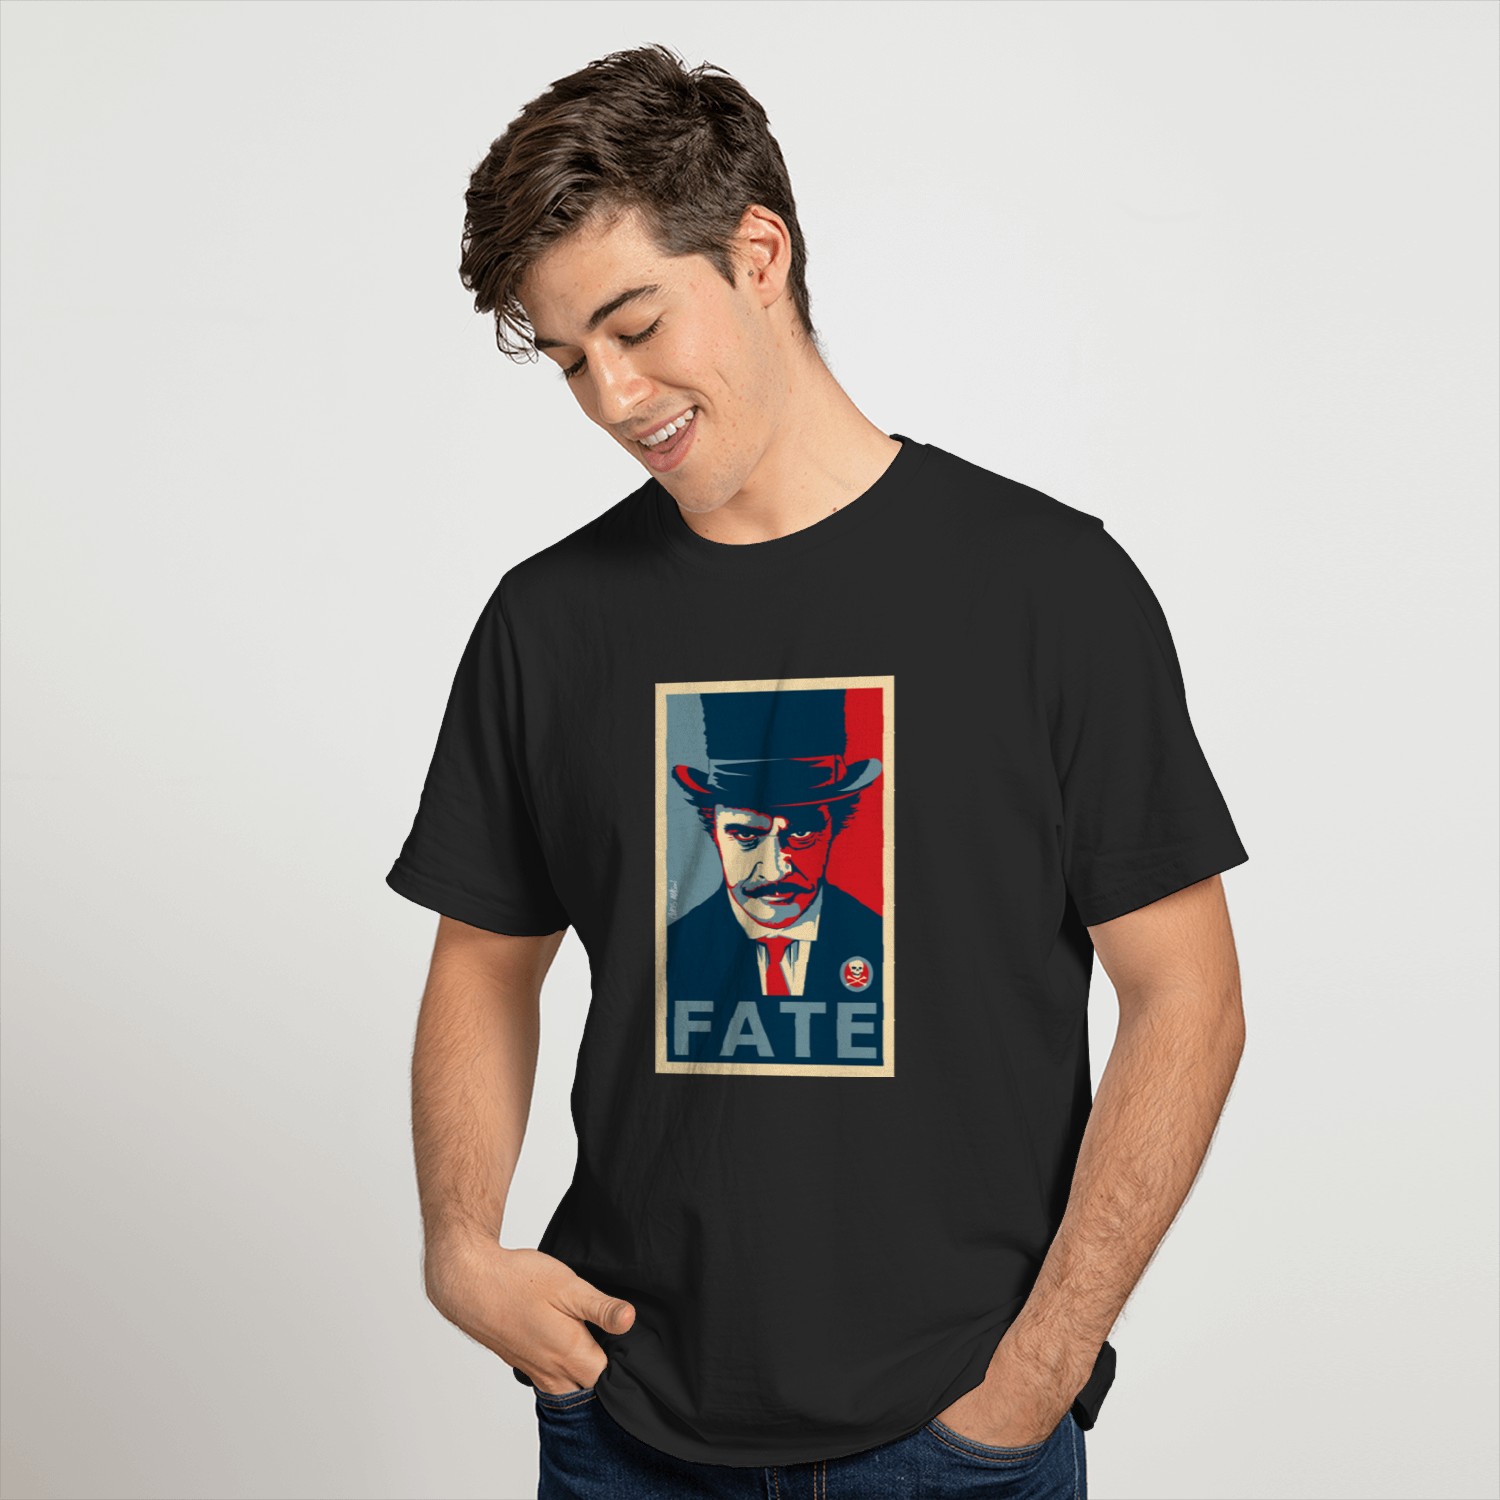 Orioles Hot Dog Race T-Shirt  Shirts, Print clothes, T shirt